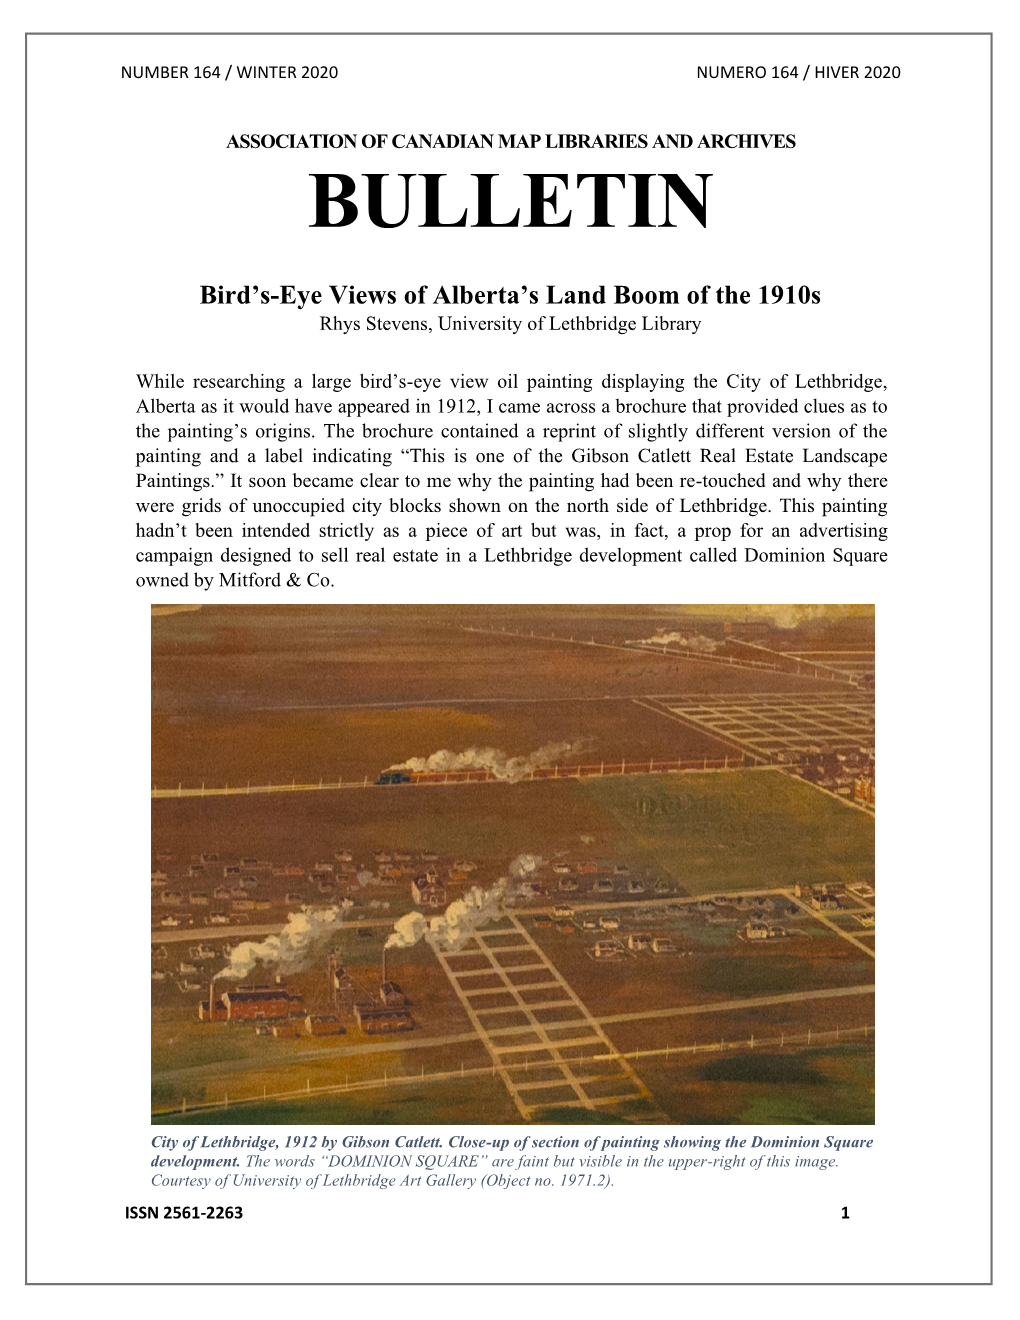 BULLETIN Bird's-Eye Views of Alberta's Land Boom of the 1910S